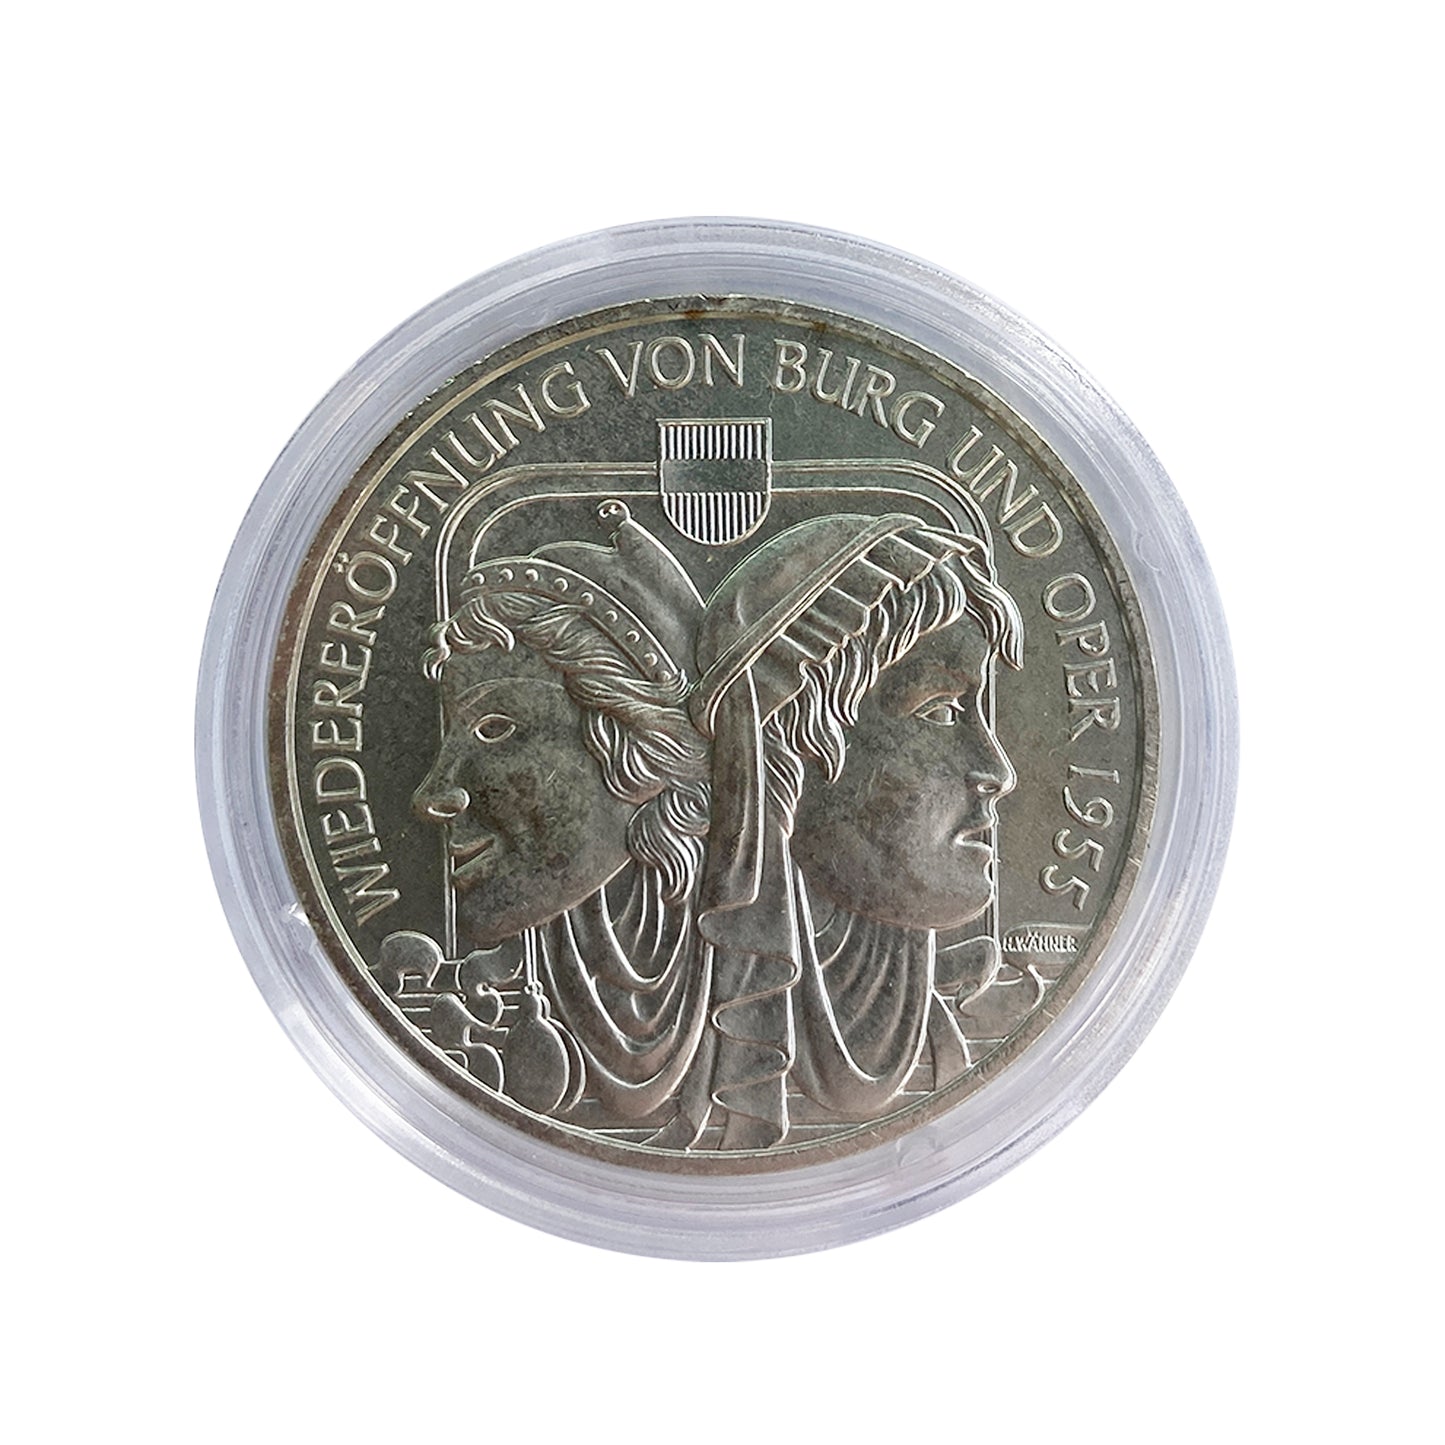 Austria - Moneda 10 euros plata 2005 -  Reapertura de Castillo y Ópera